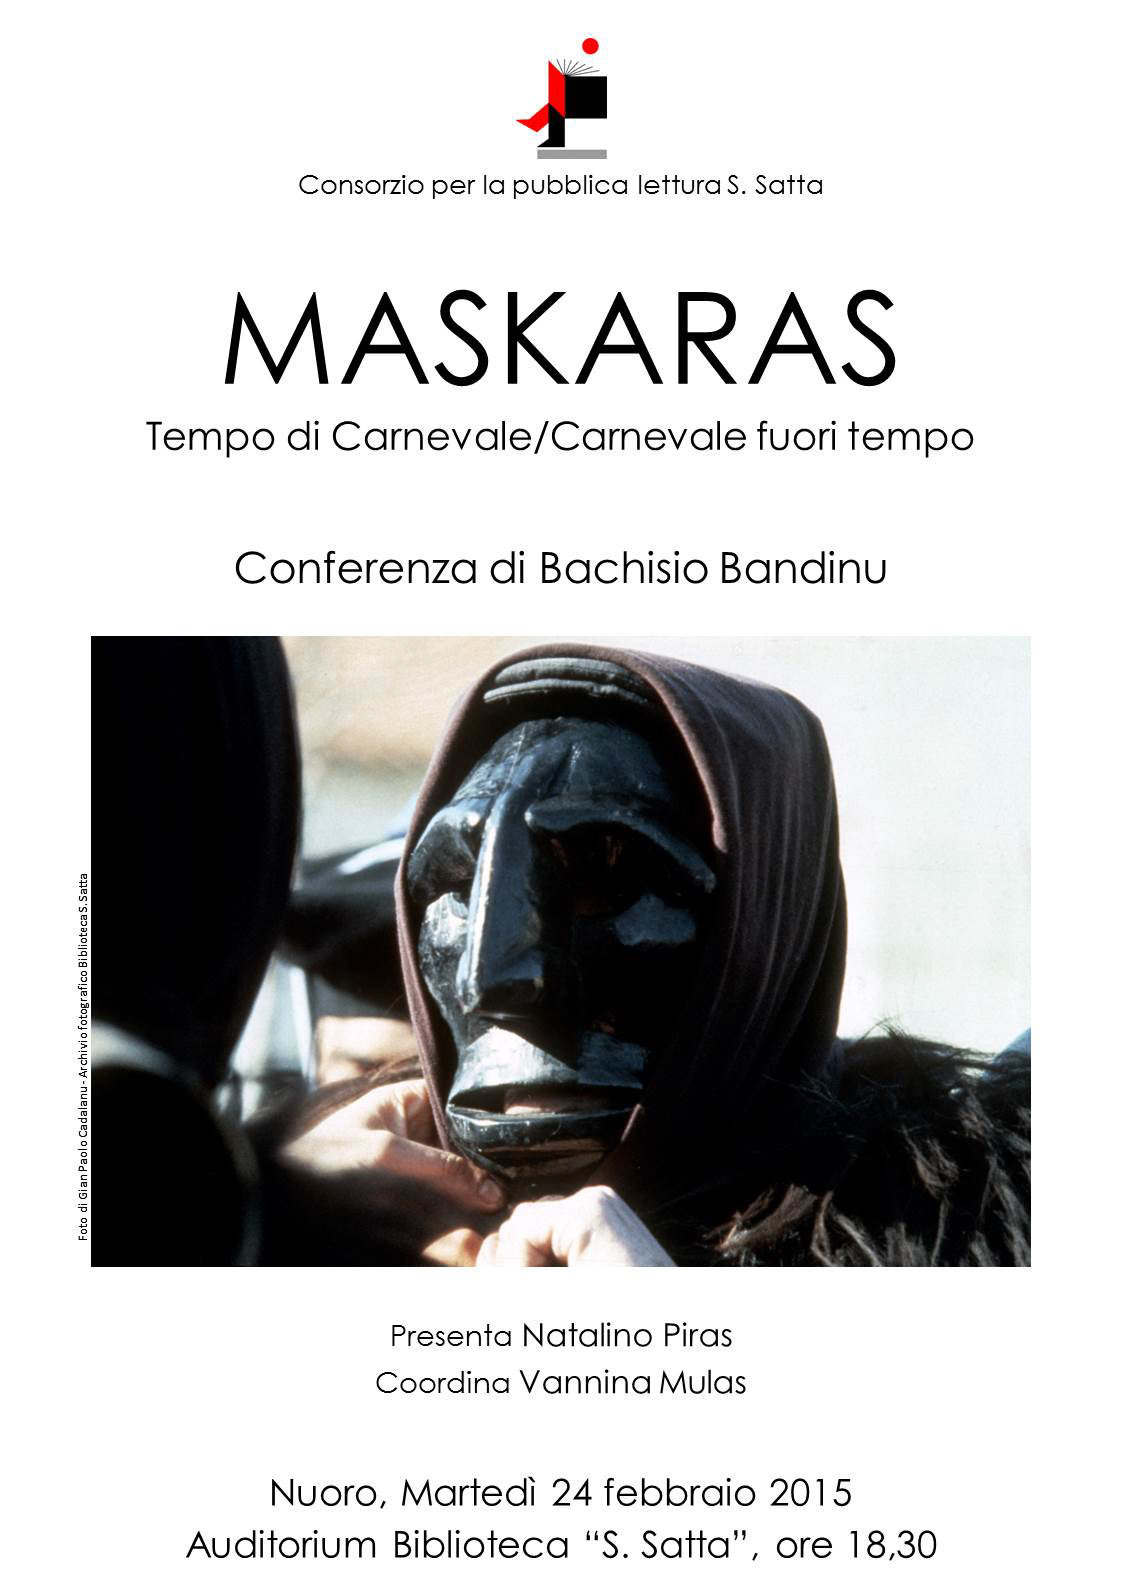 Maskaras: conferenza di Bachisio Bandinu alla biblioteca Satta